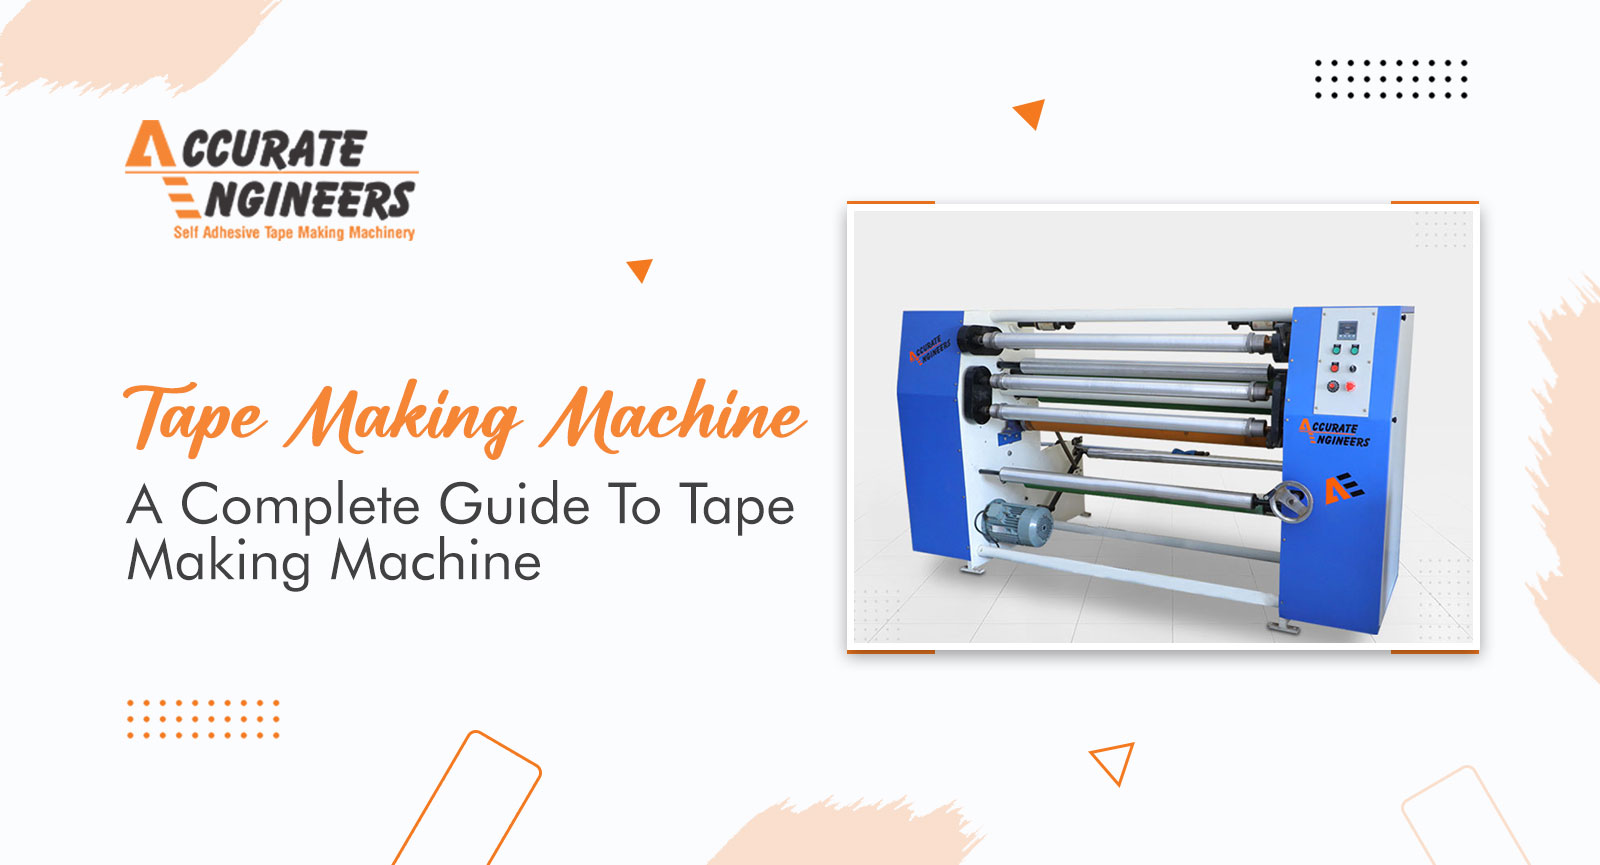 Tape Making Machine, Accurate Engineers